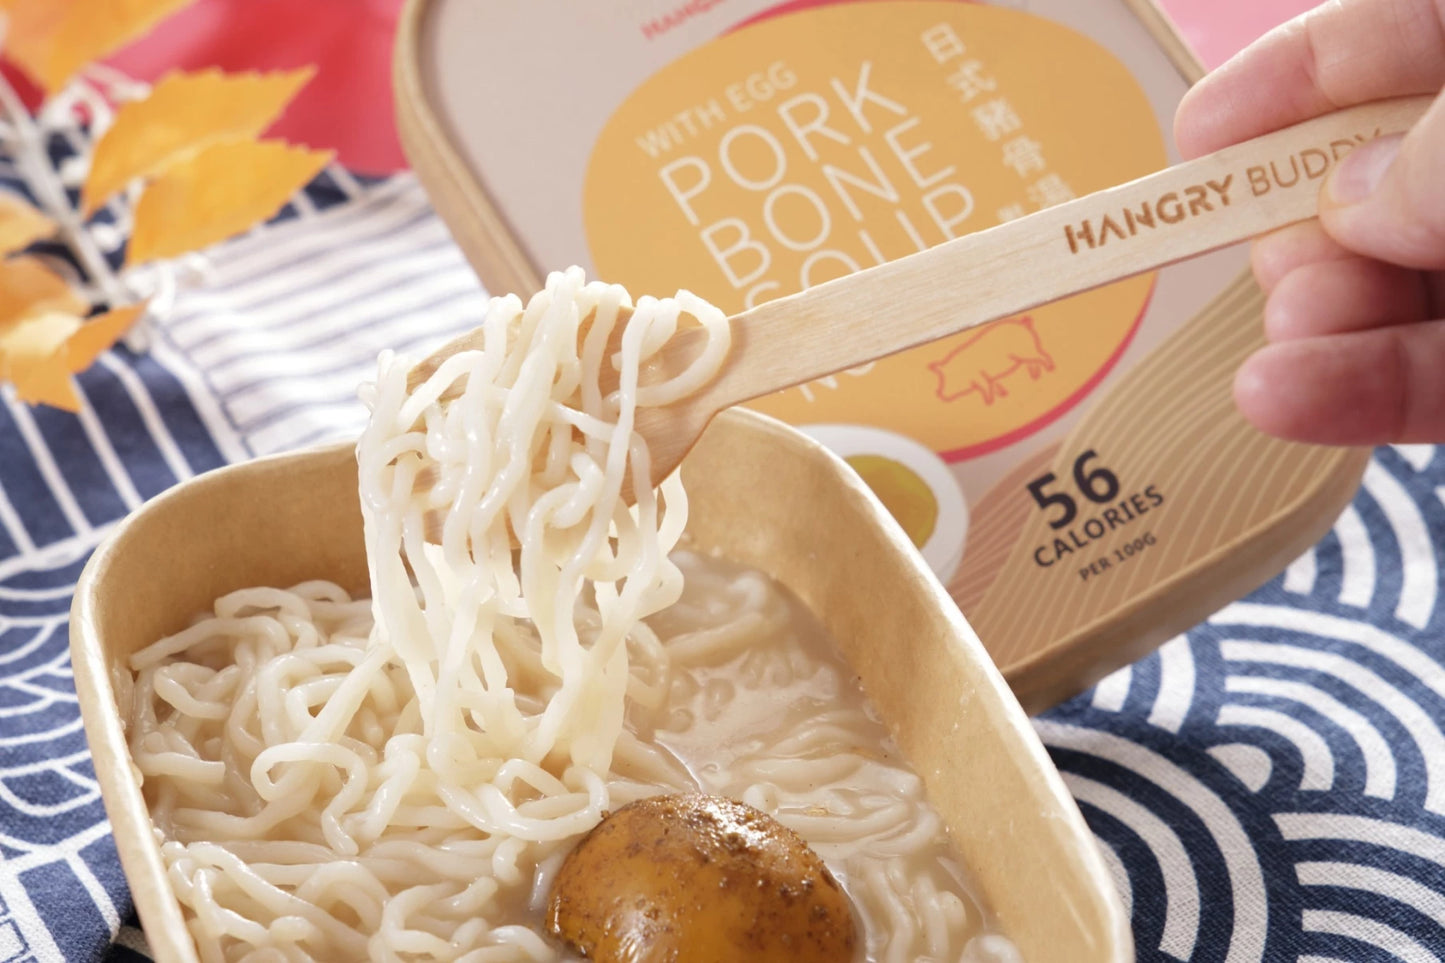 Pork Bone Soup Oat Konjac Noodle日式豬骨湯玉子燕麥蒟蒻麵